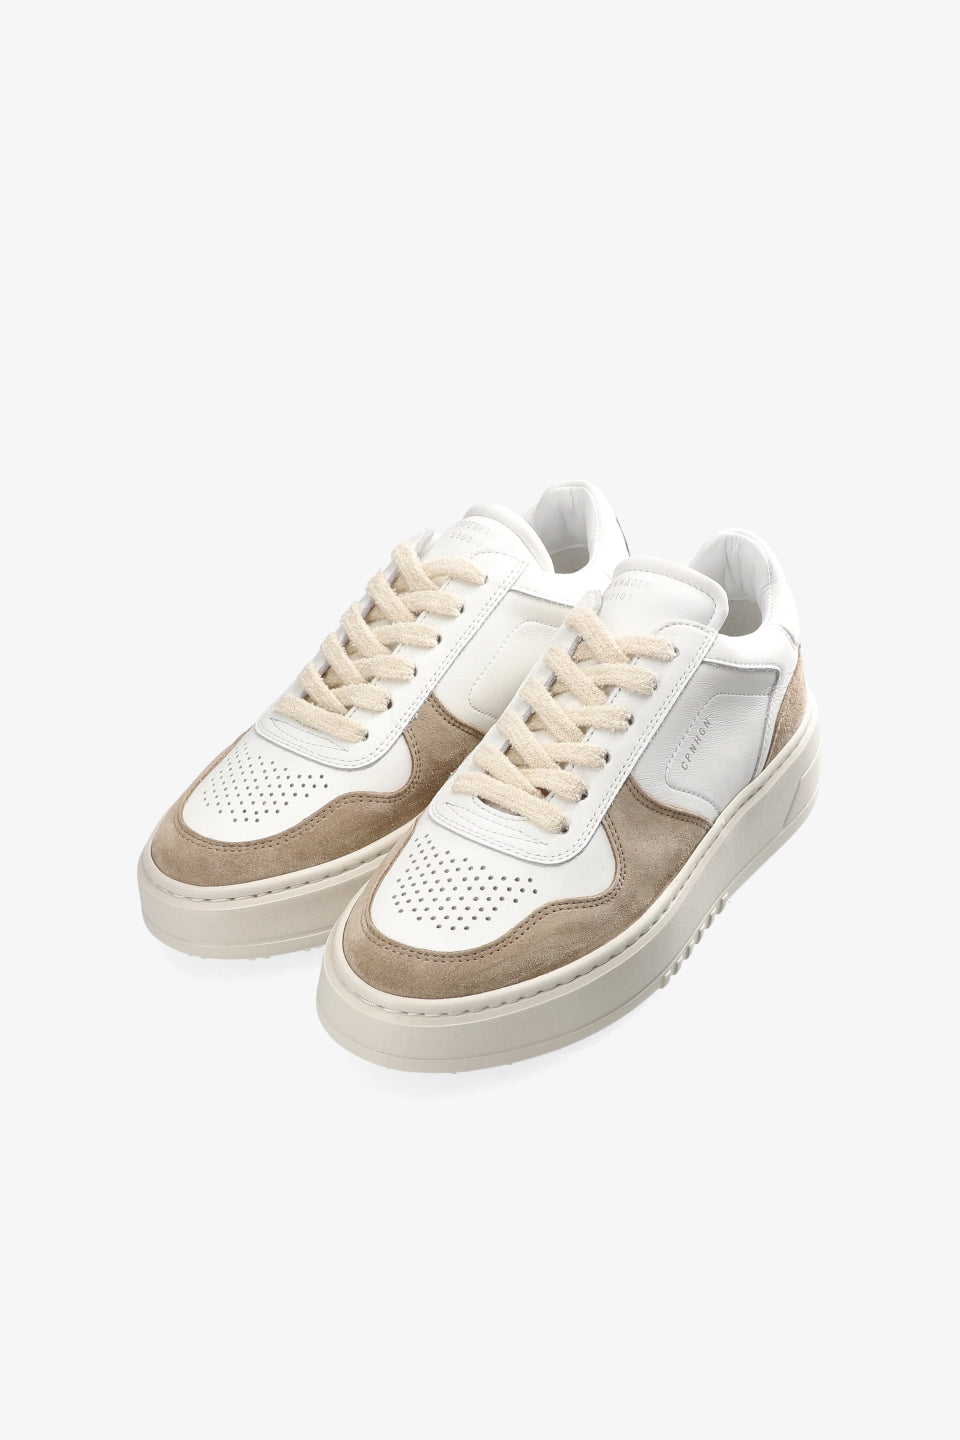 Sneakers CPH75 White/Nut